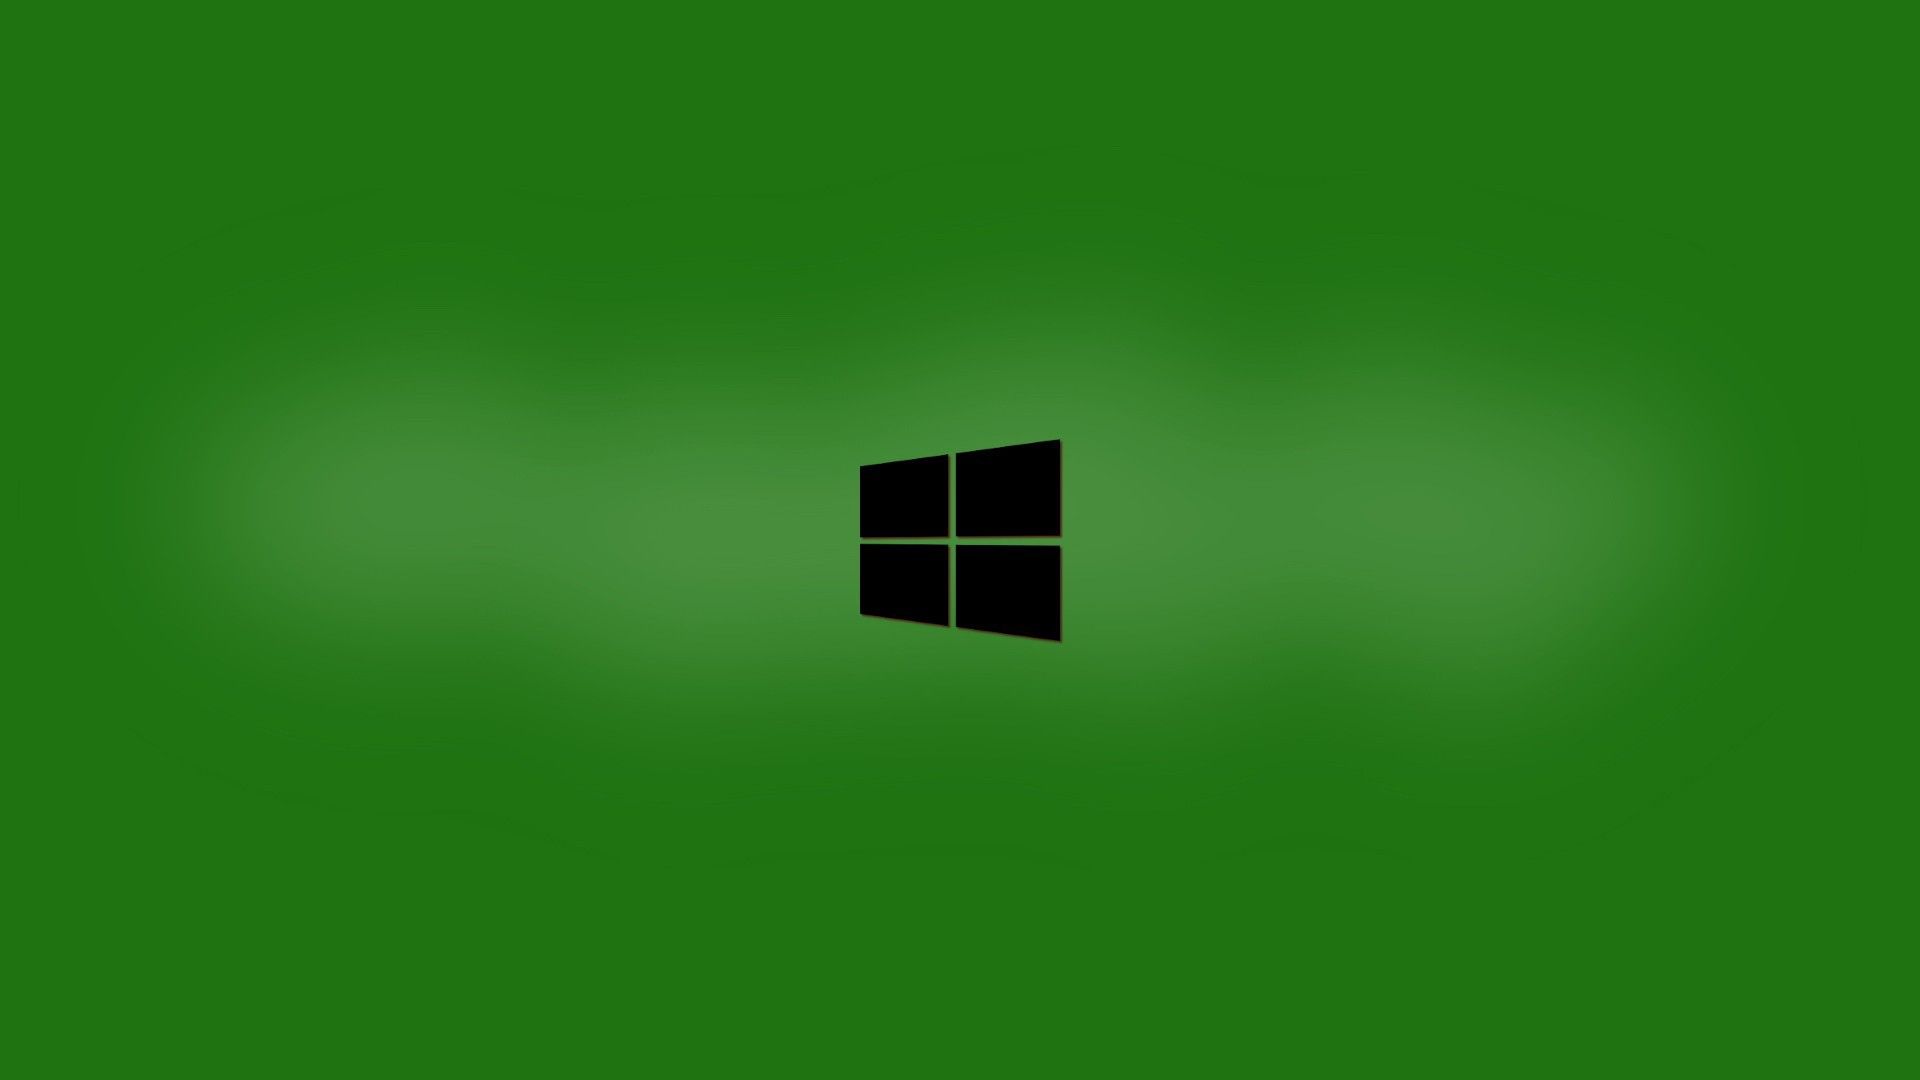 Windows 8 hd 1080p wallpapers download